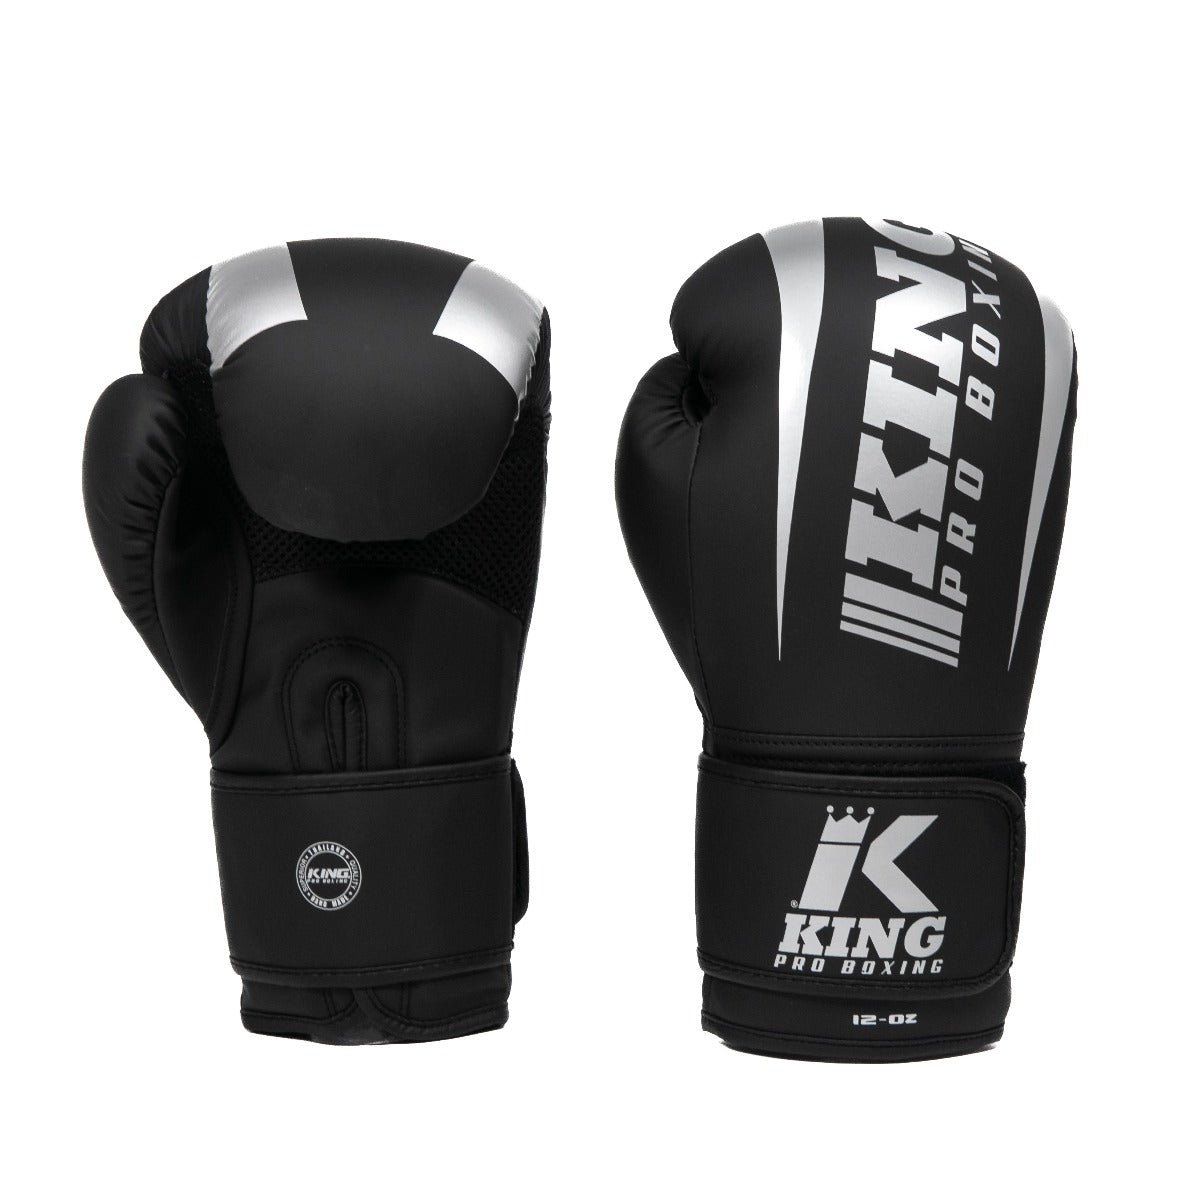 King PRO boxing boxing gloves - REVO 7